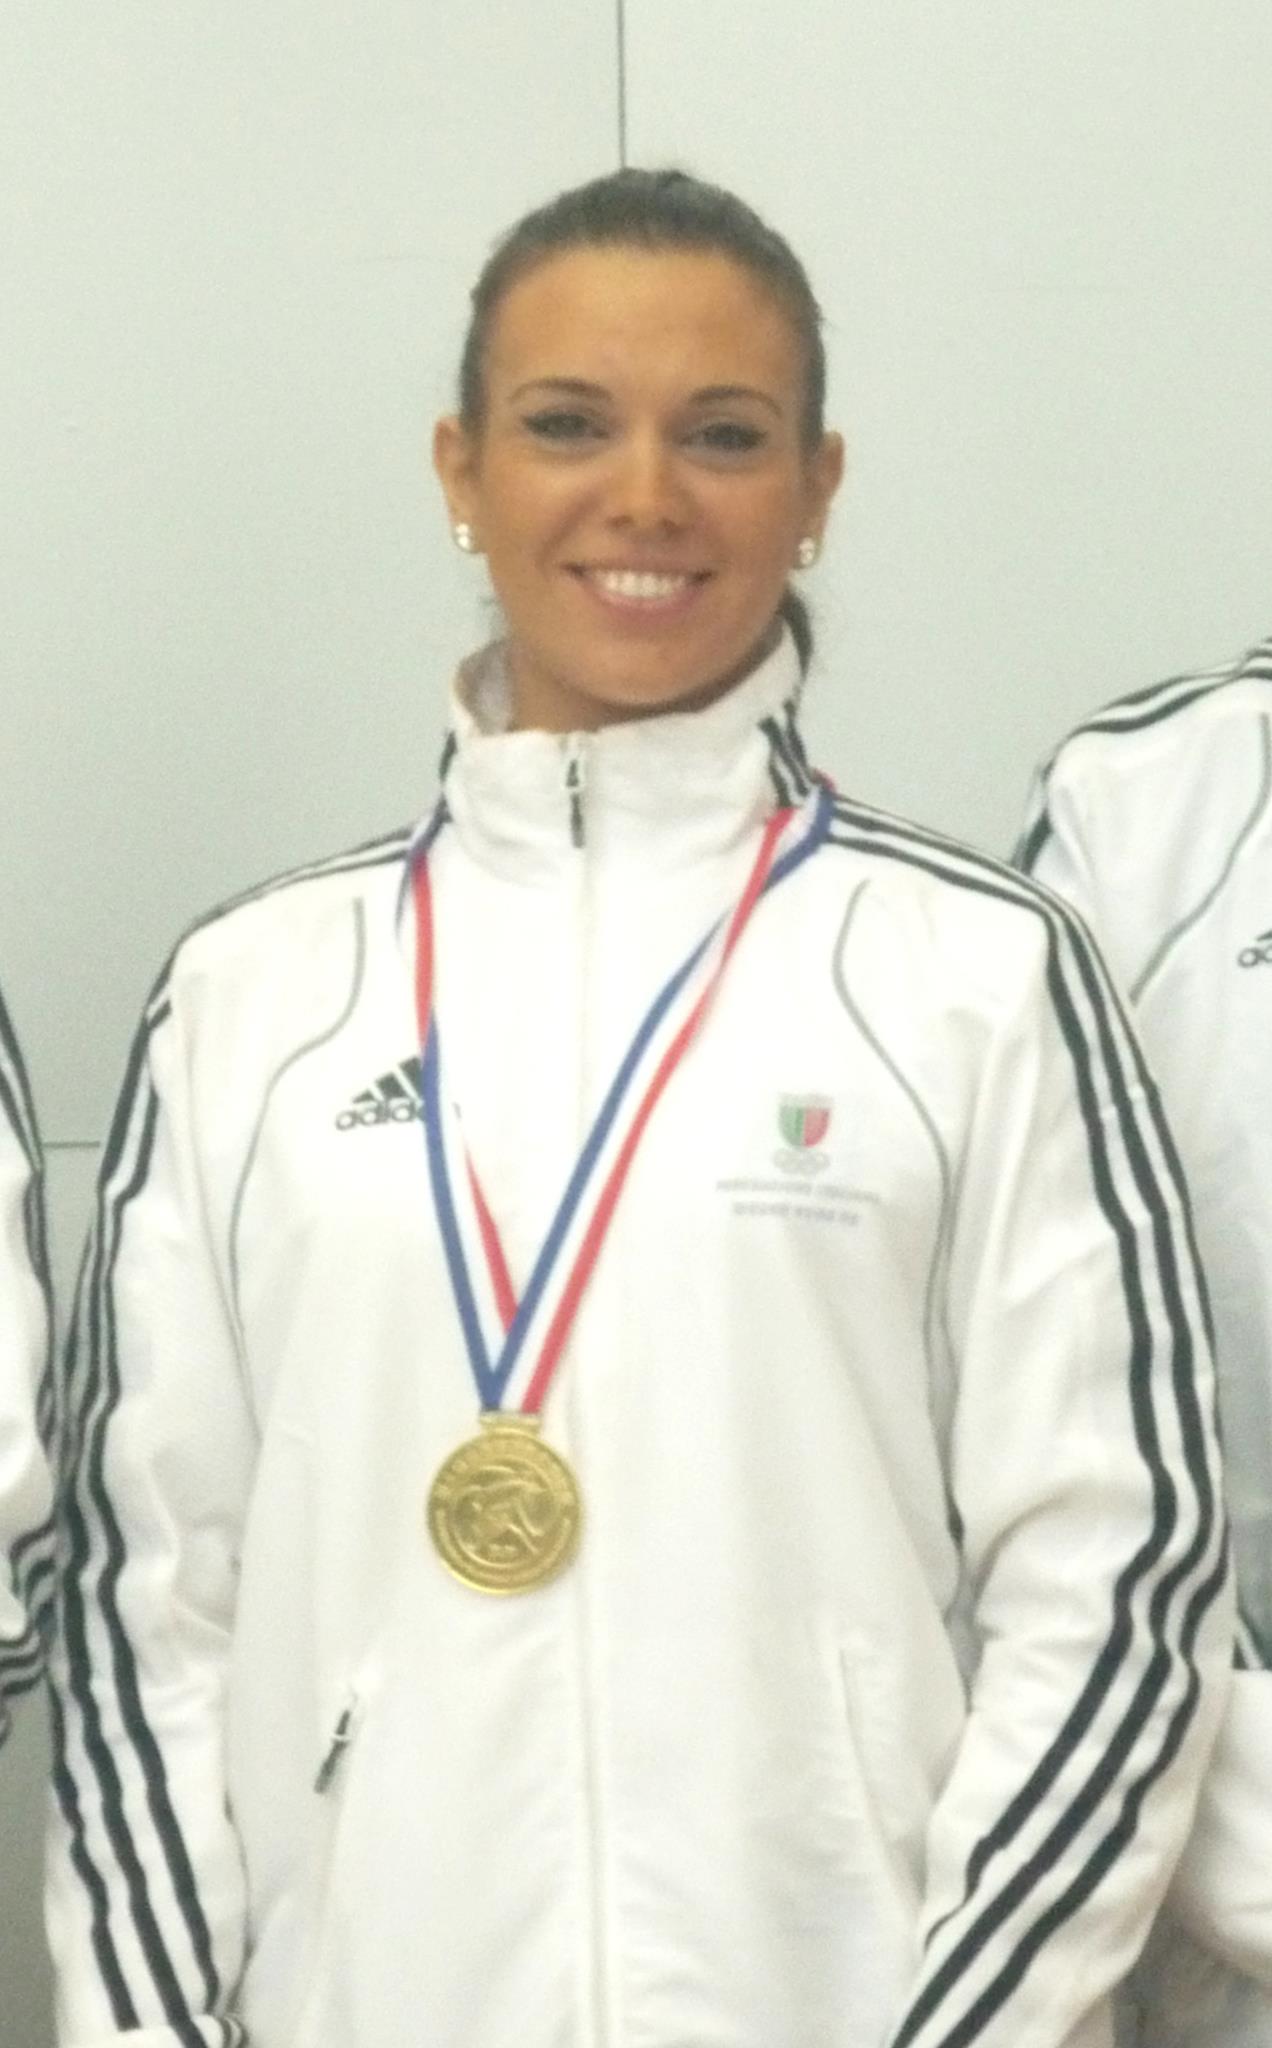 Campionati europei wu shu, argento e due bronzi per Arianna Romano e Simone Mangiante